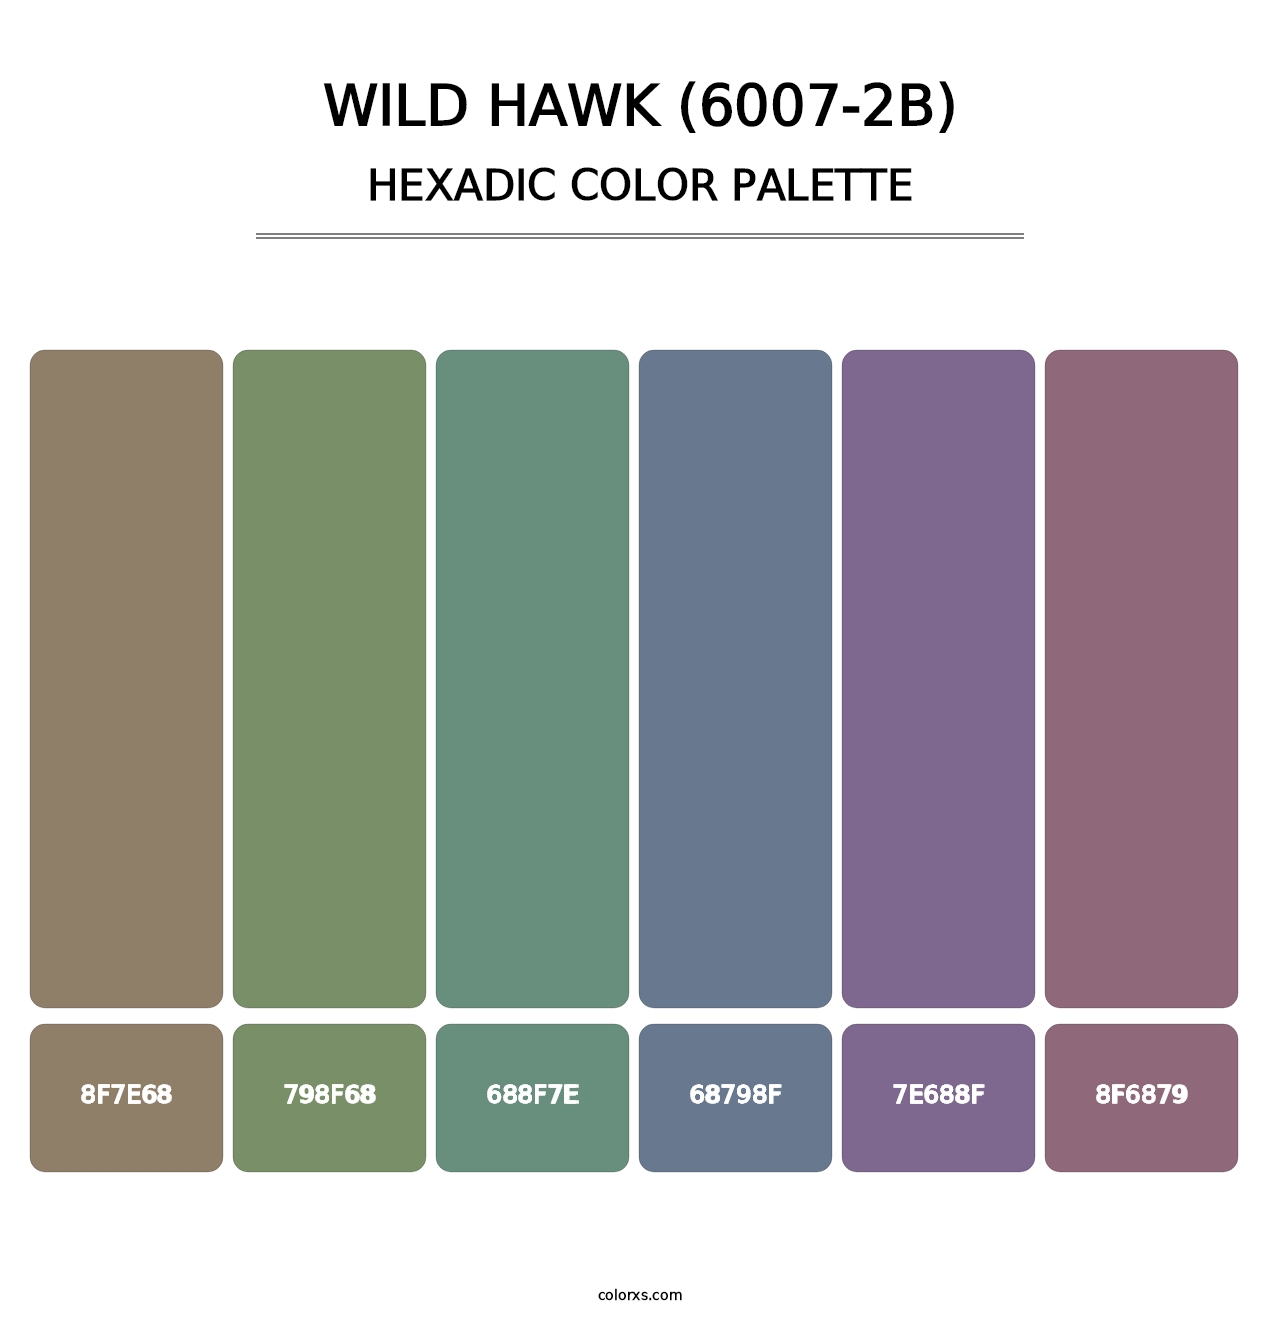 Wild Hawk (6007-2B) - Hexadic Color Palette